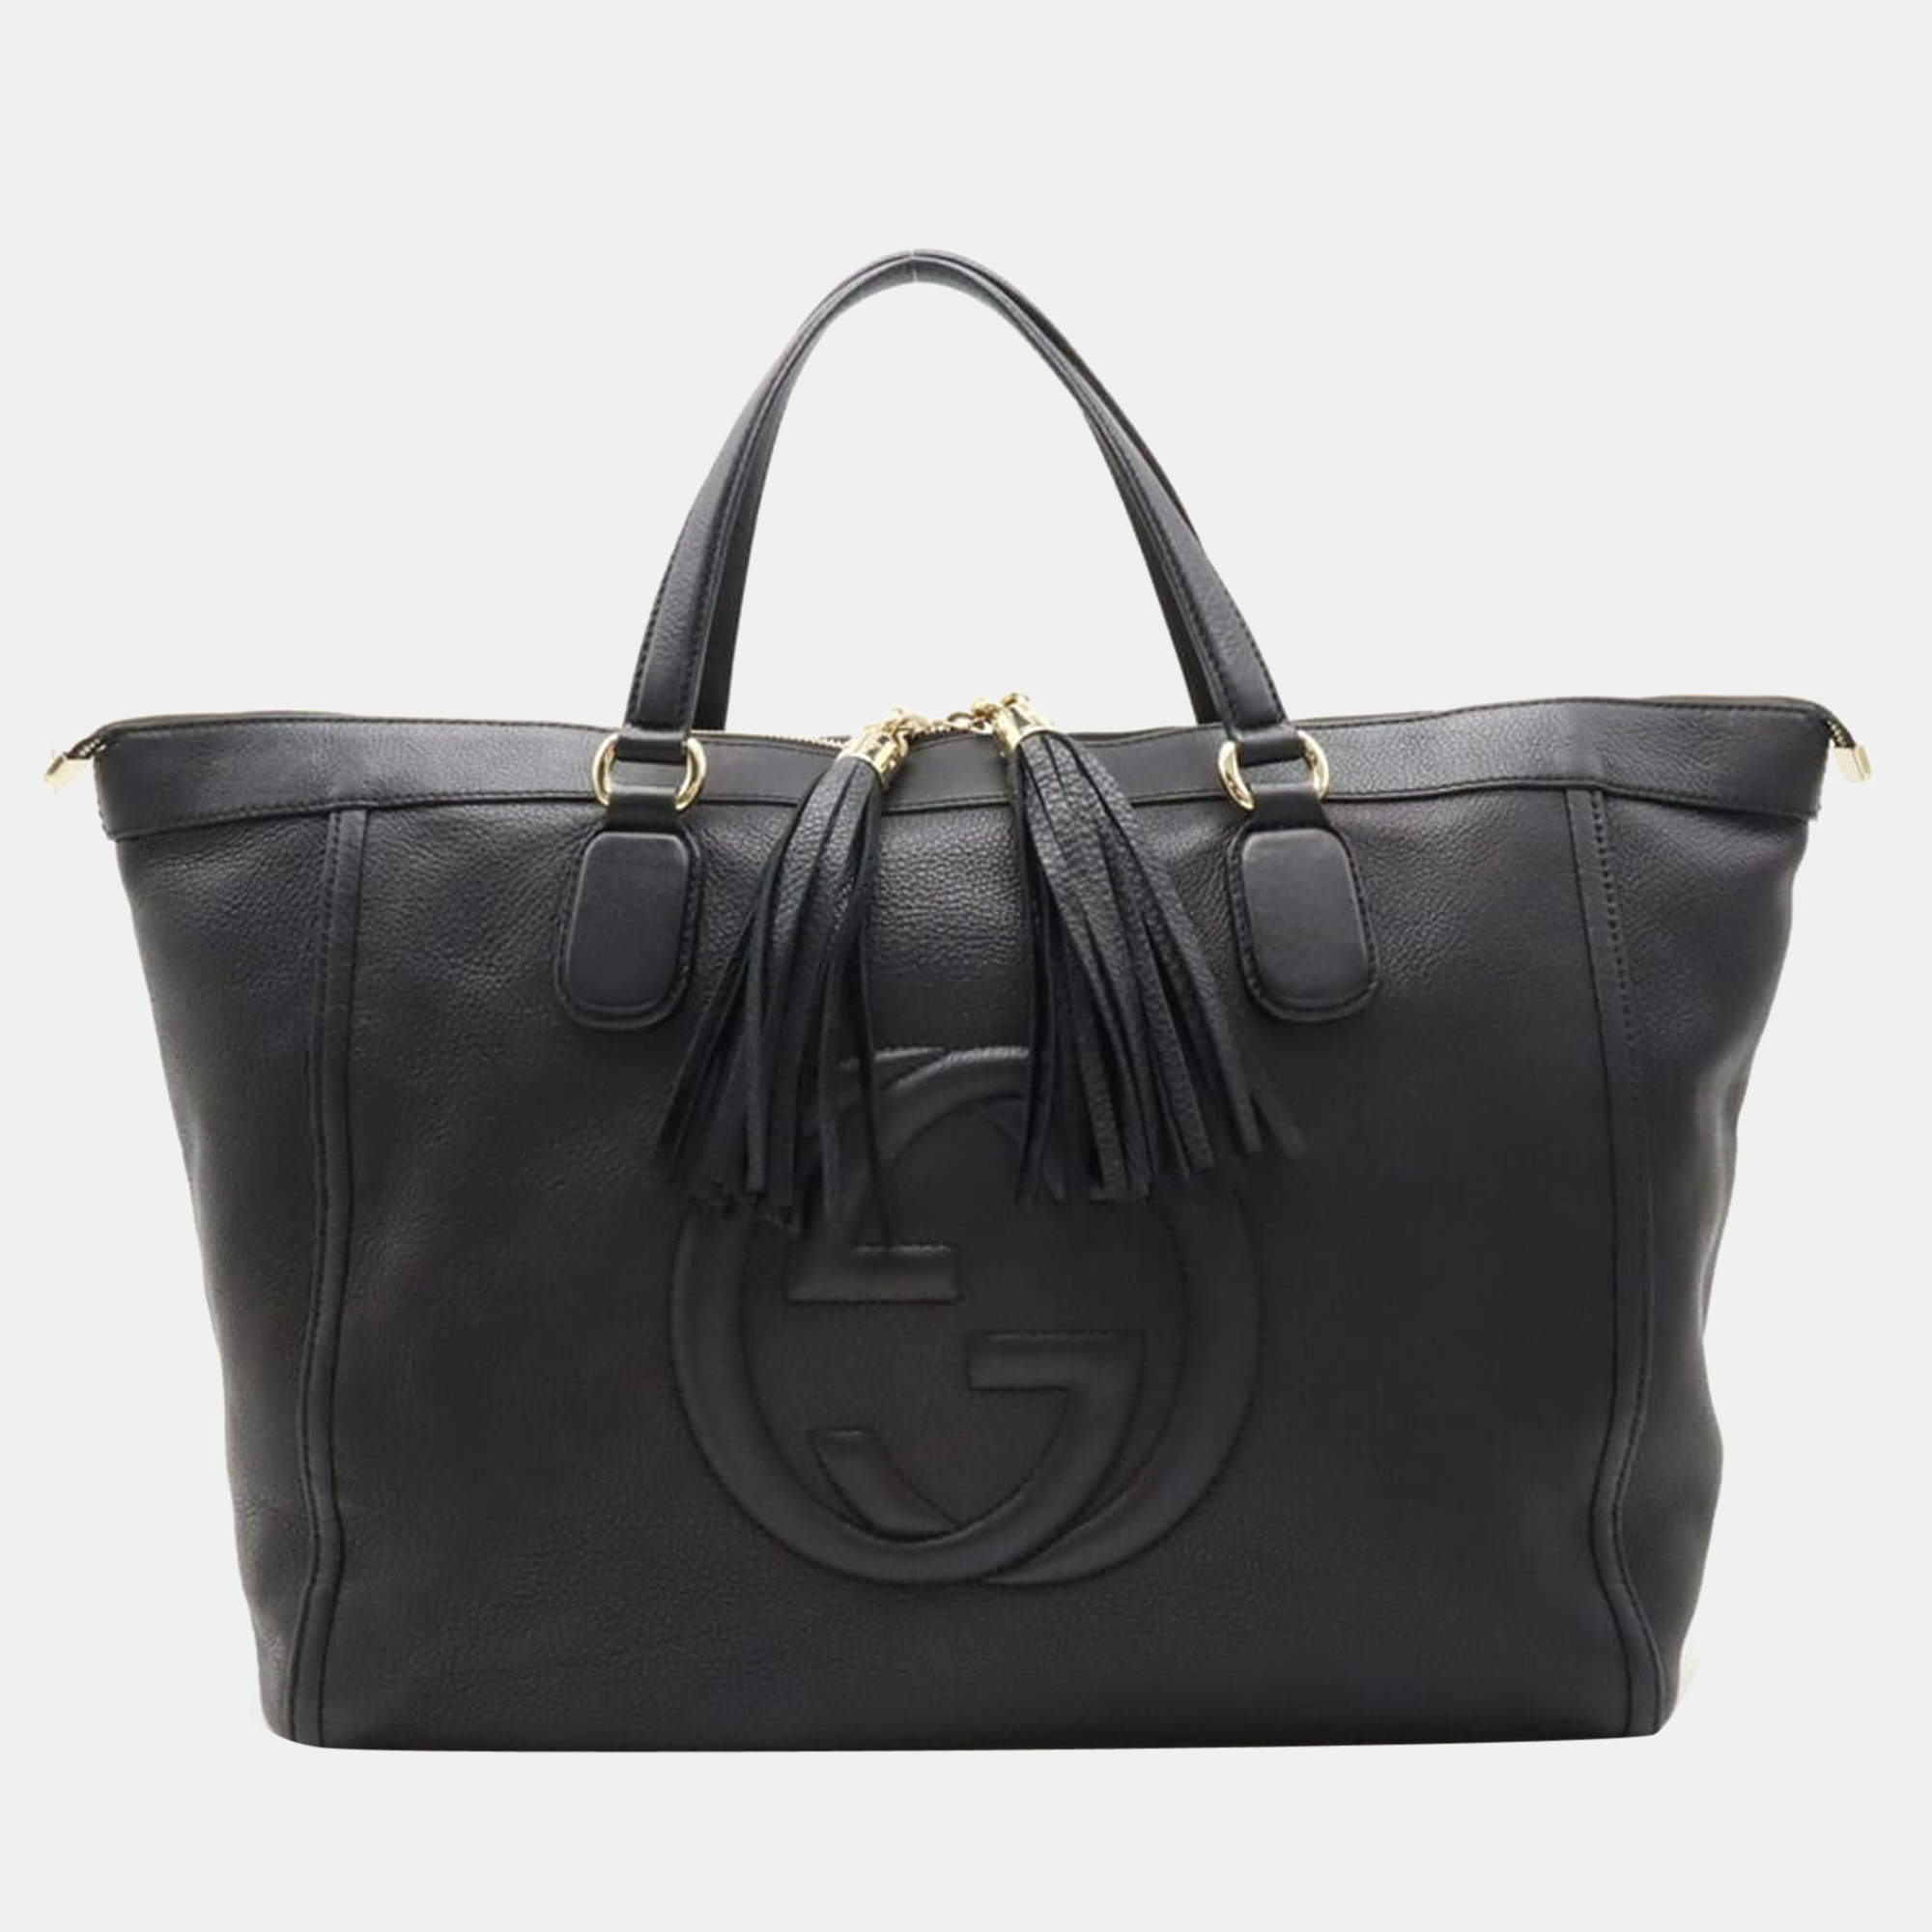 Gucci White/Grey Lizard Embossed Leather Medium Soho Tote Bag